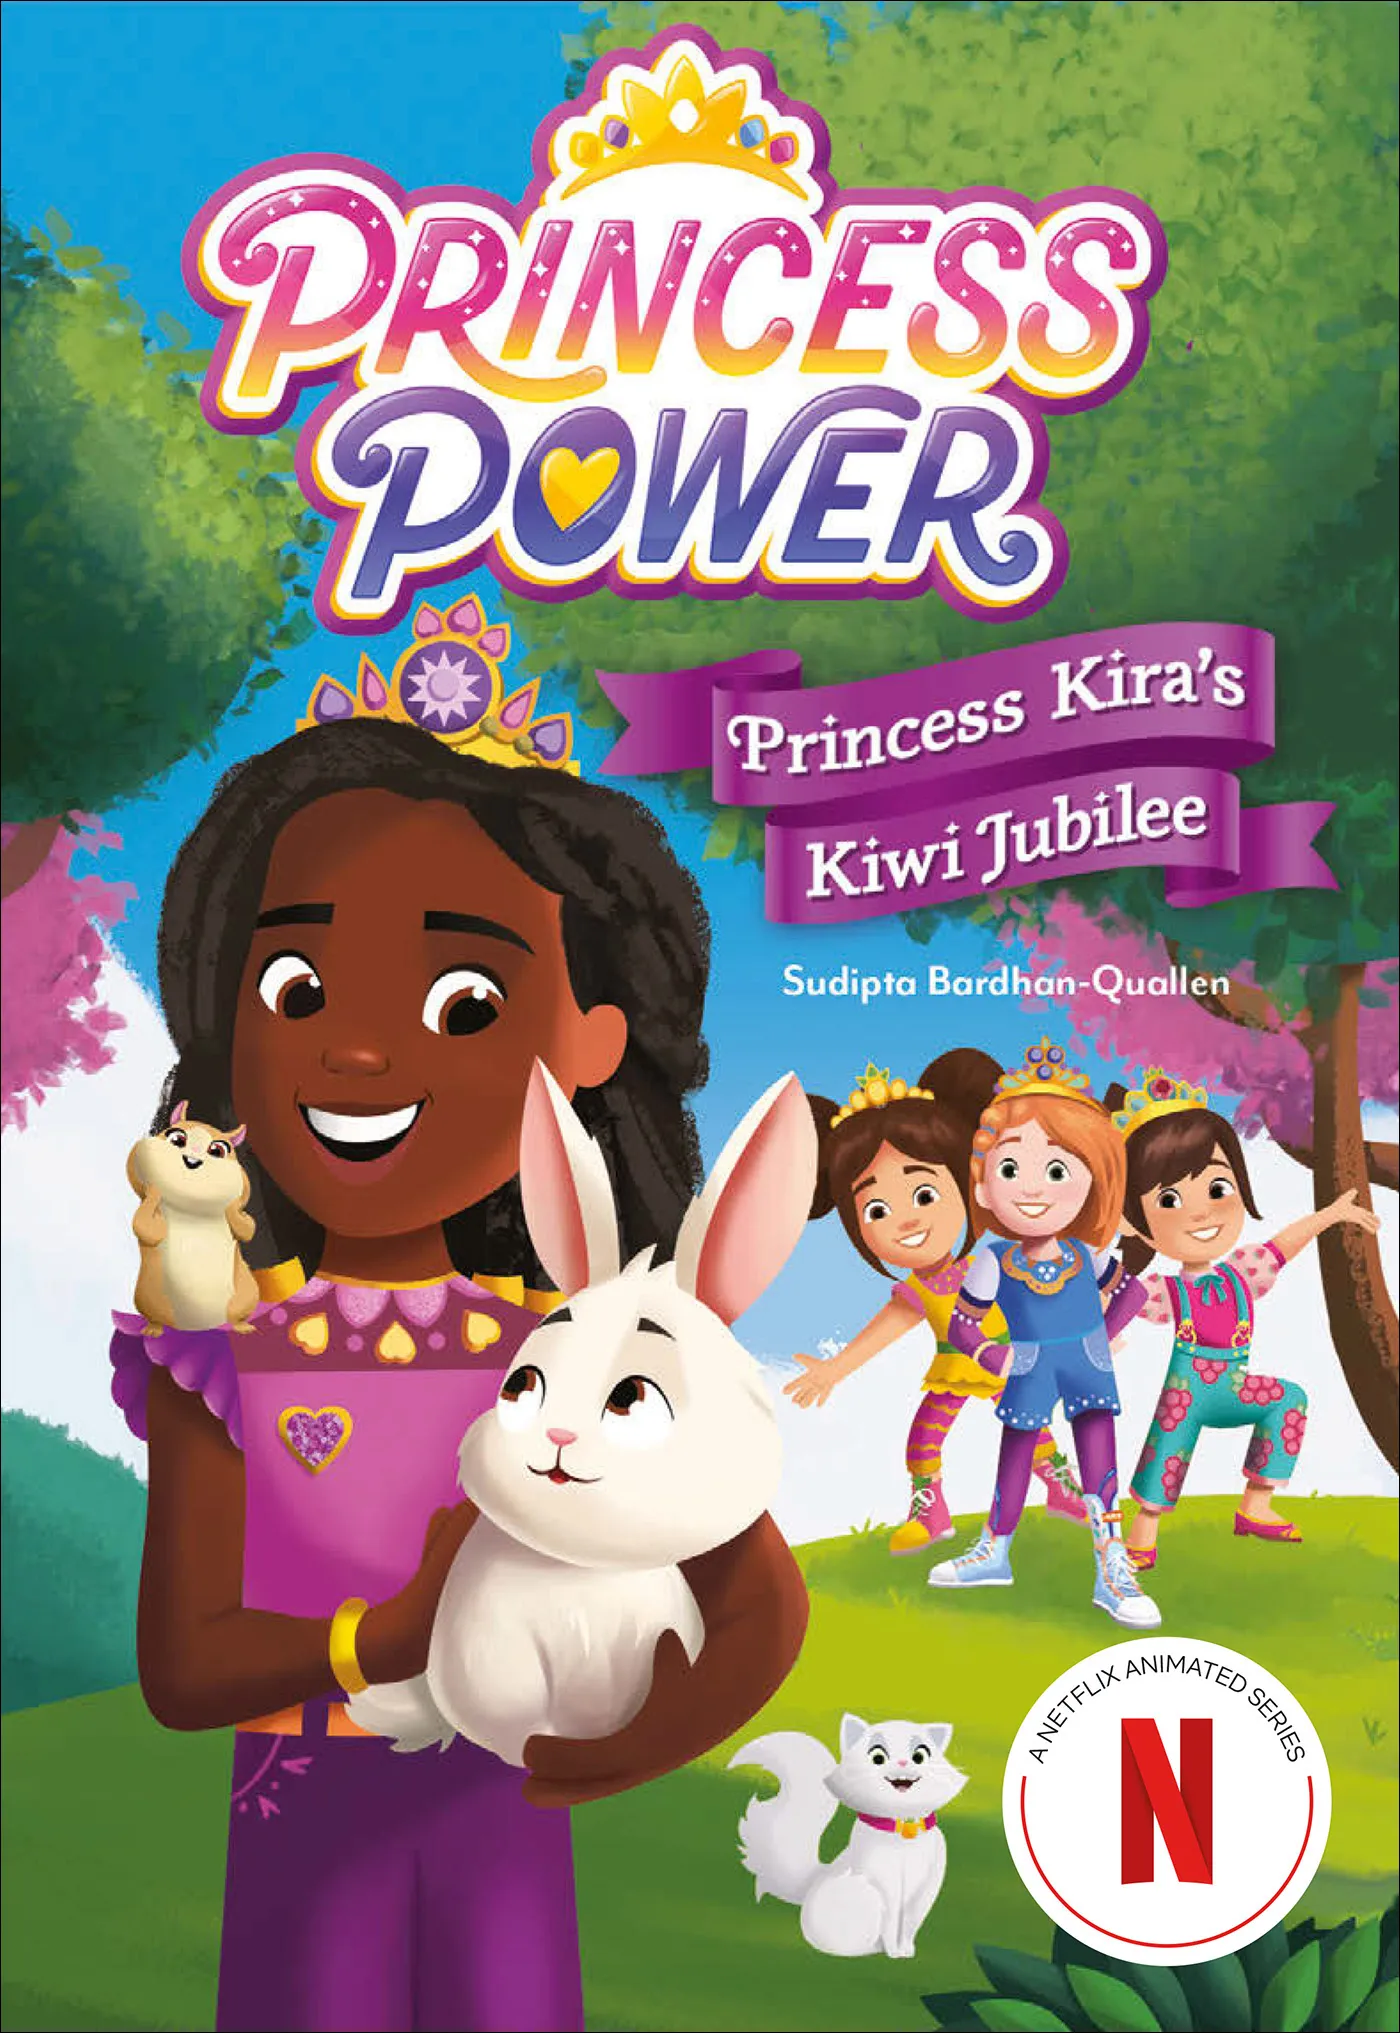 Princess Kira's Kiwi Jubilee (Princess Power #1)